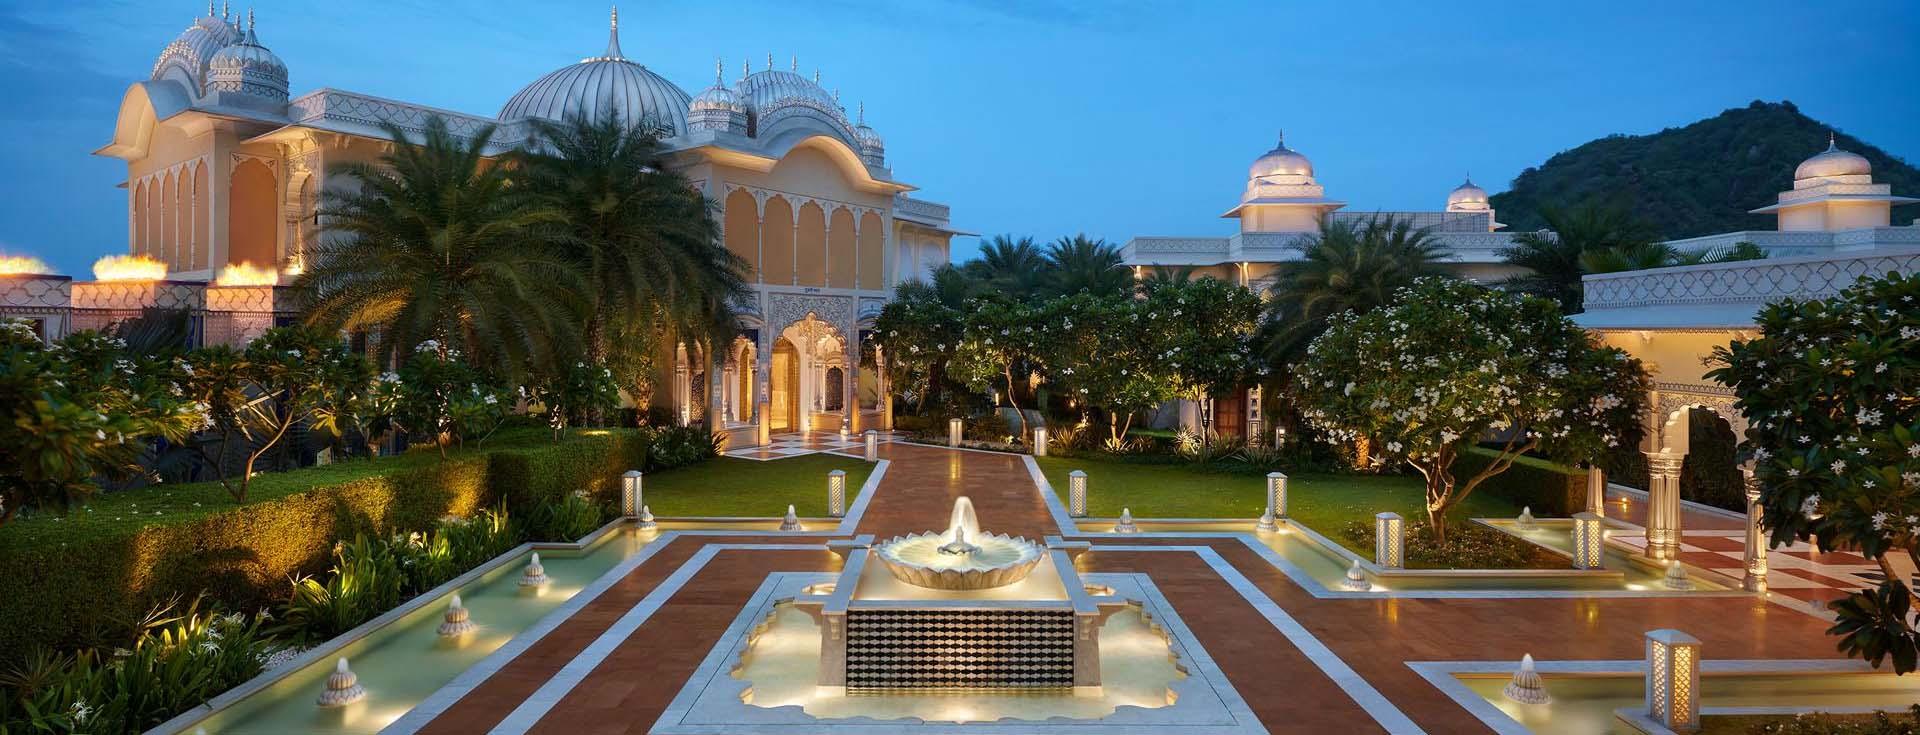 Royal Escape Offer at The Leela Palace Jaipur